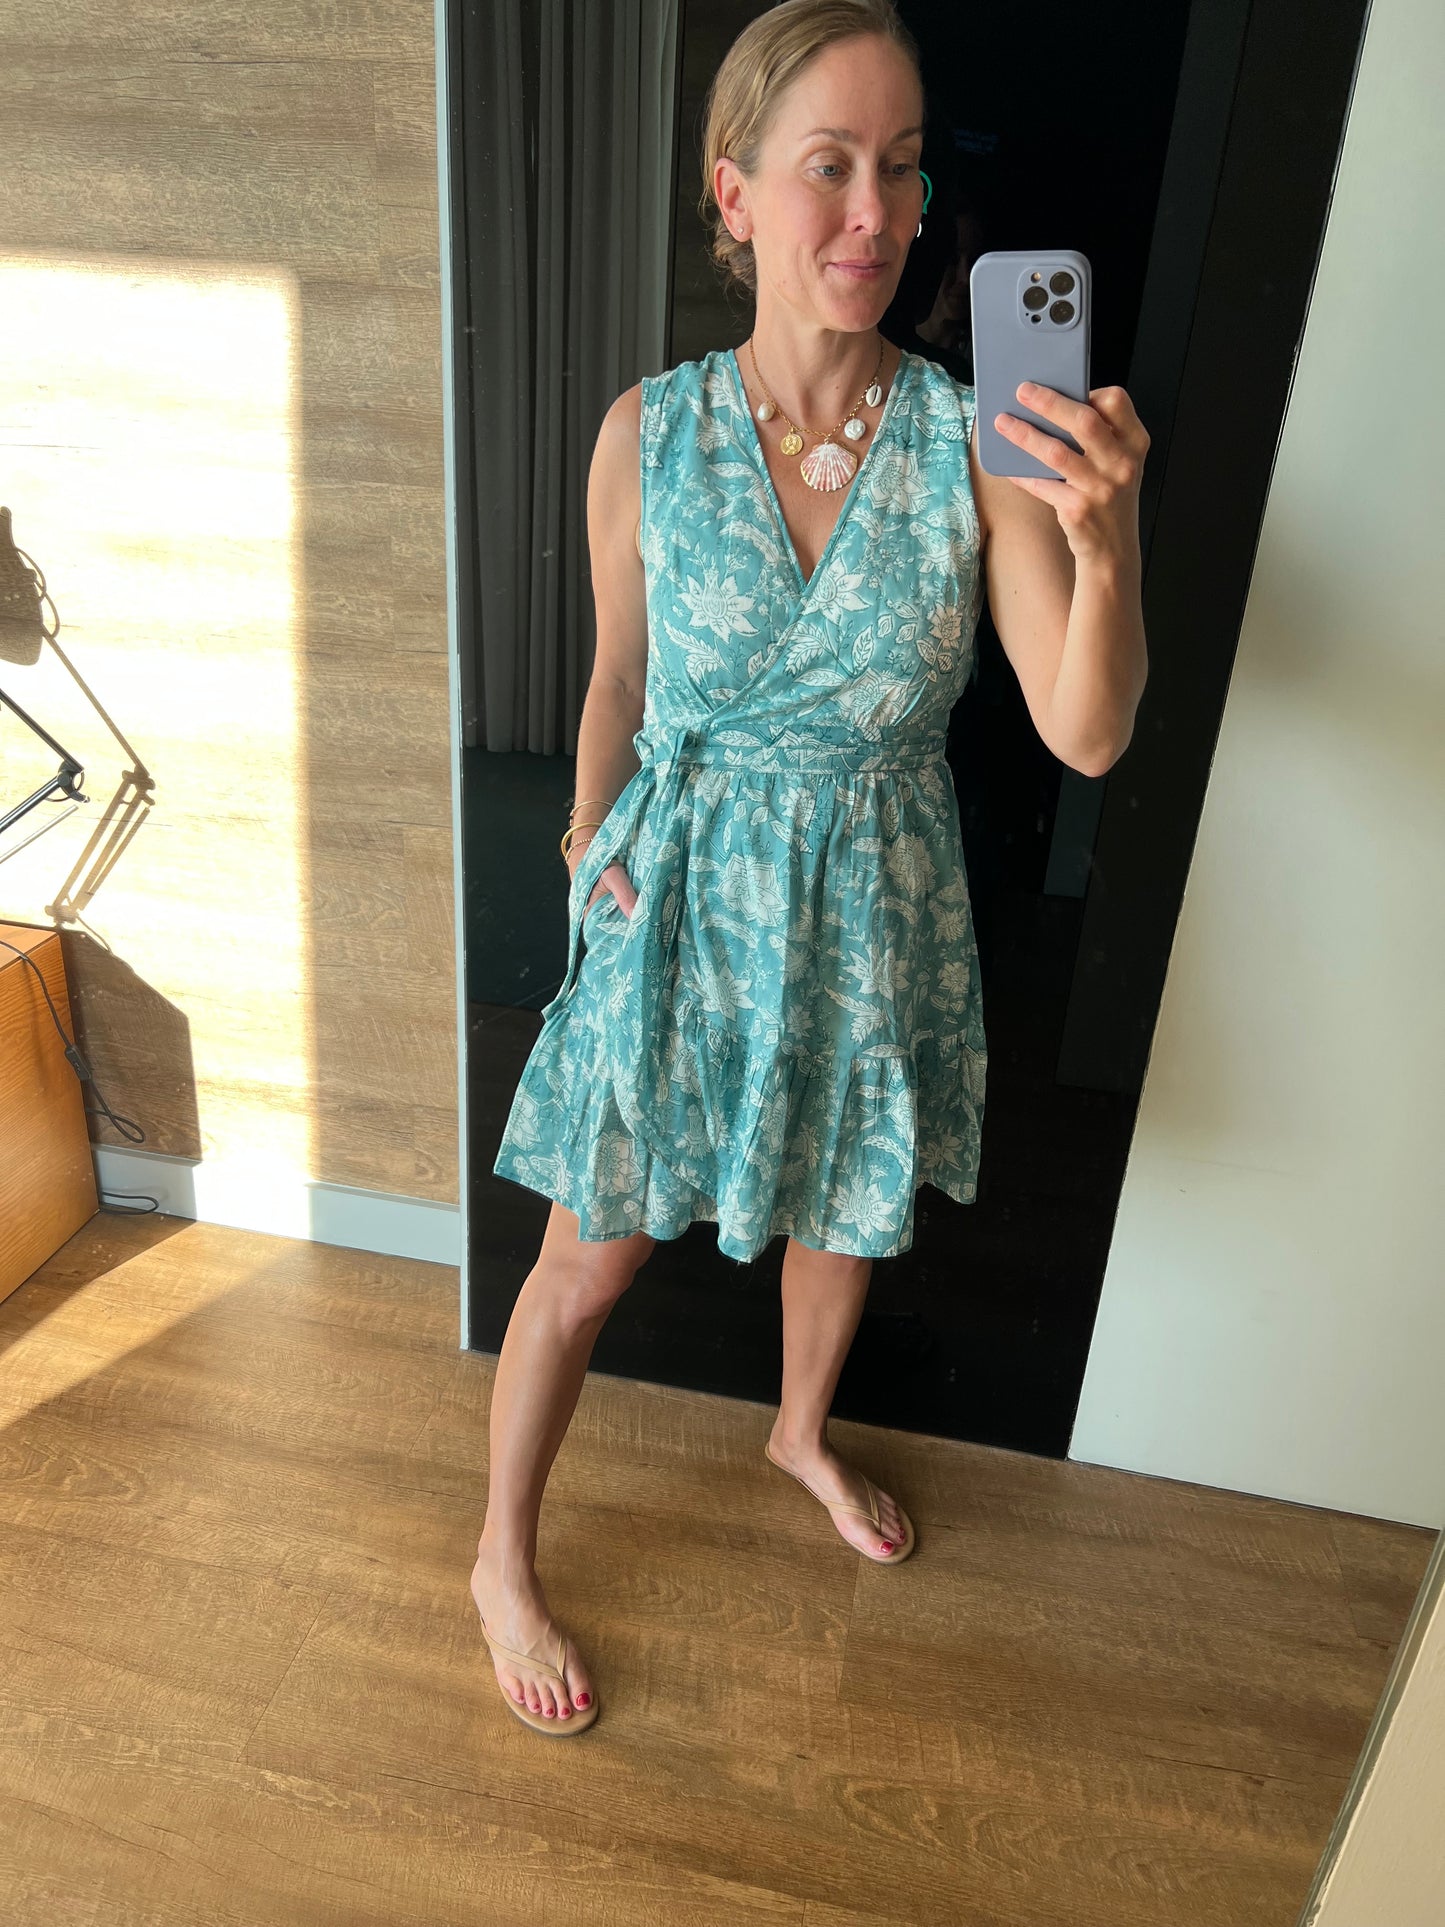 Kat Sleeveless Wrap Dress, Turquoise